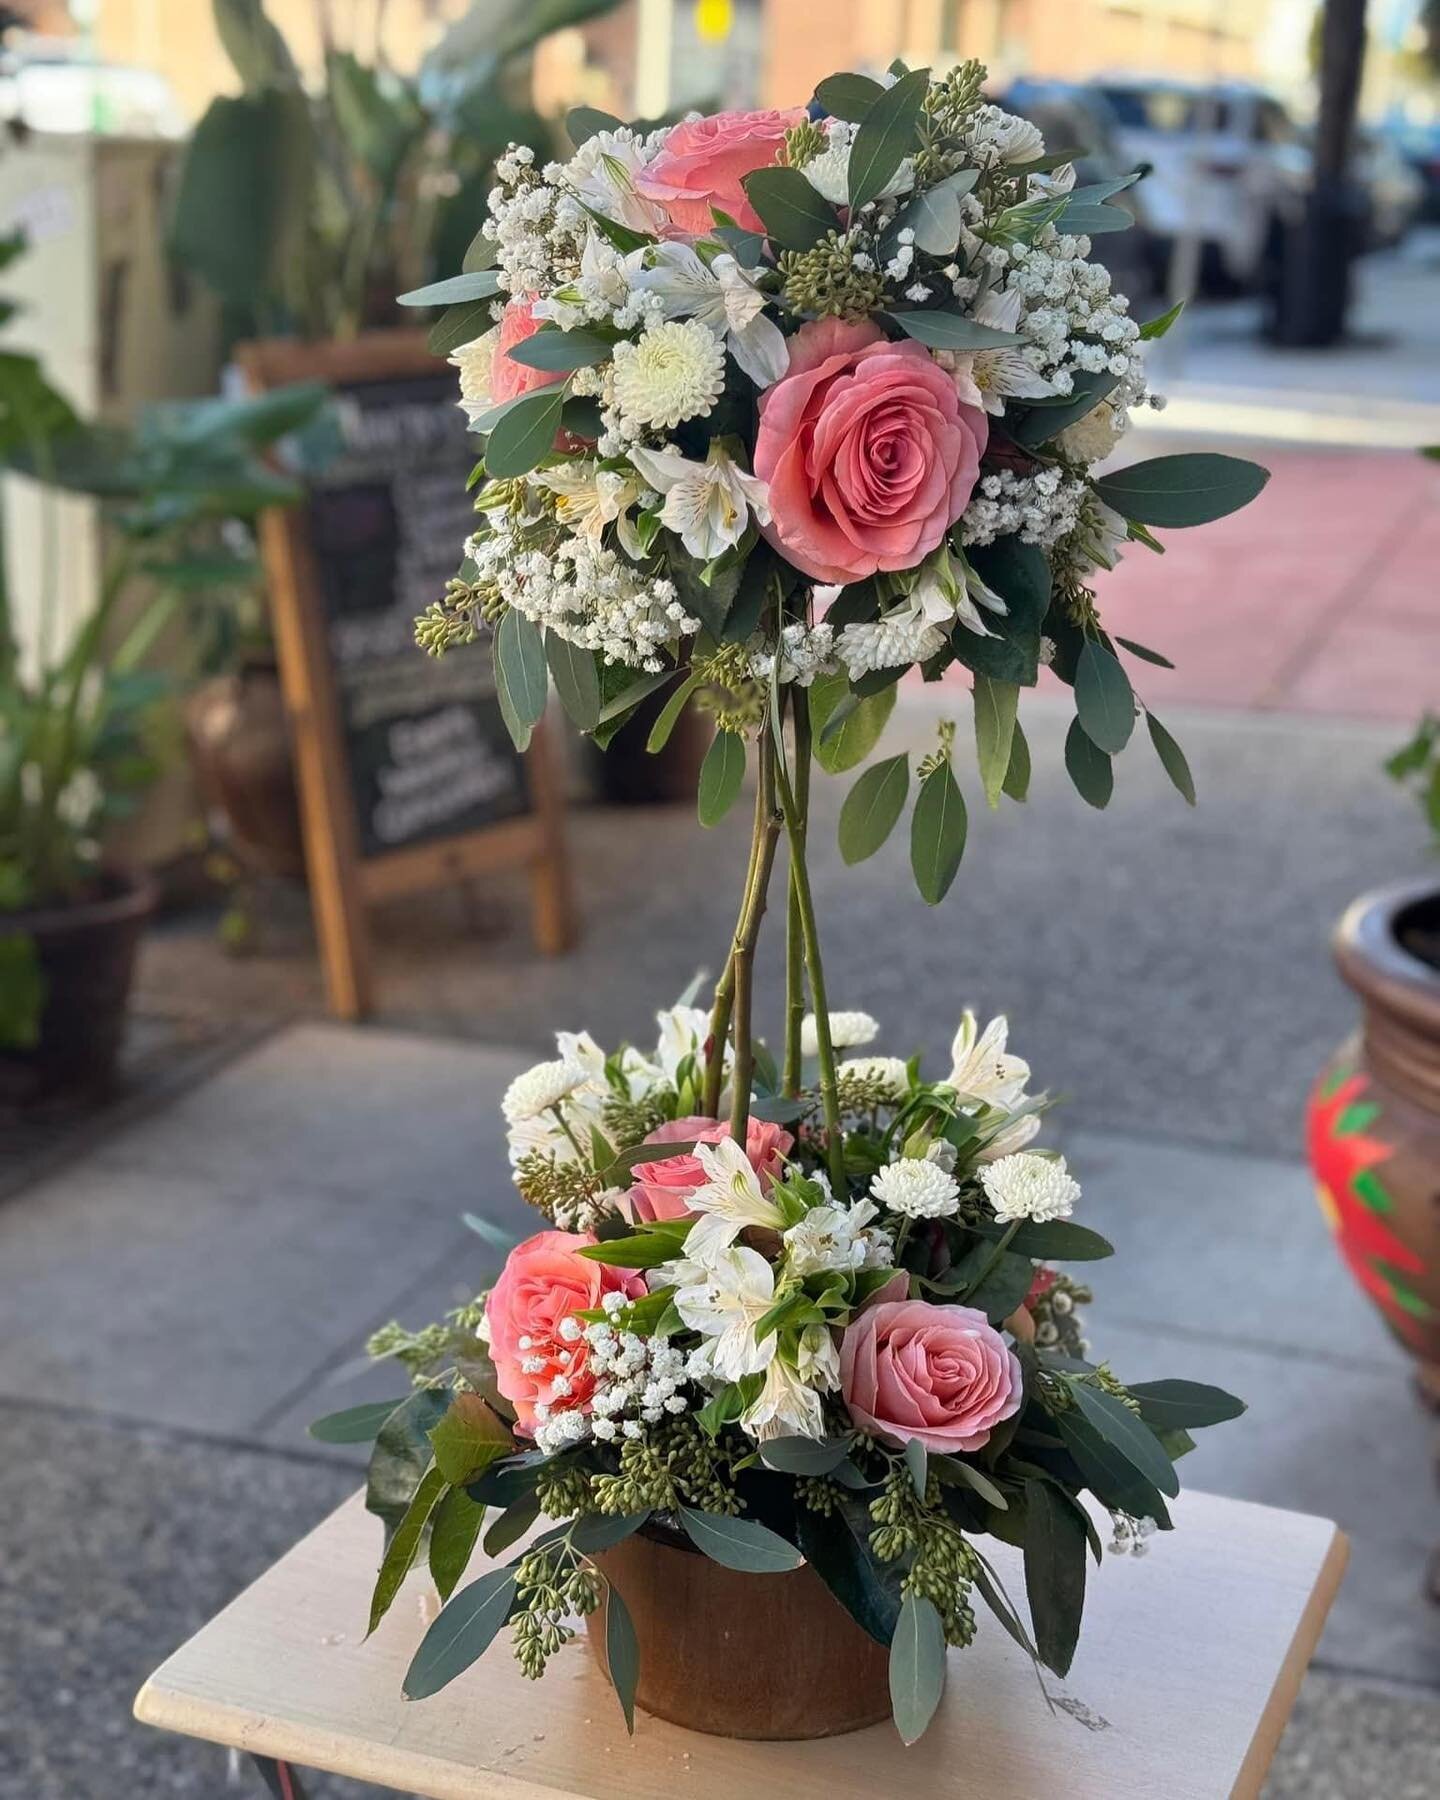 Www.minervasflowers.com #floraldesign #centerpieces #quinceanera #weddingvenue